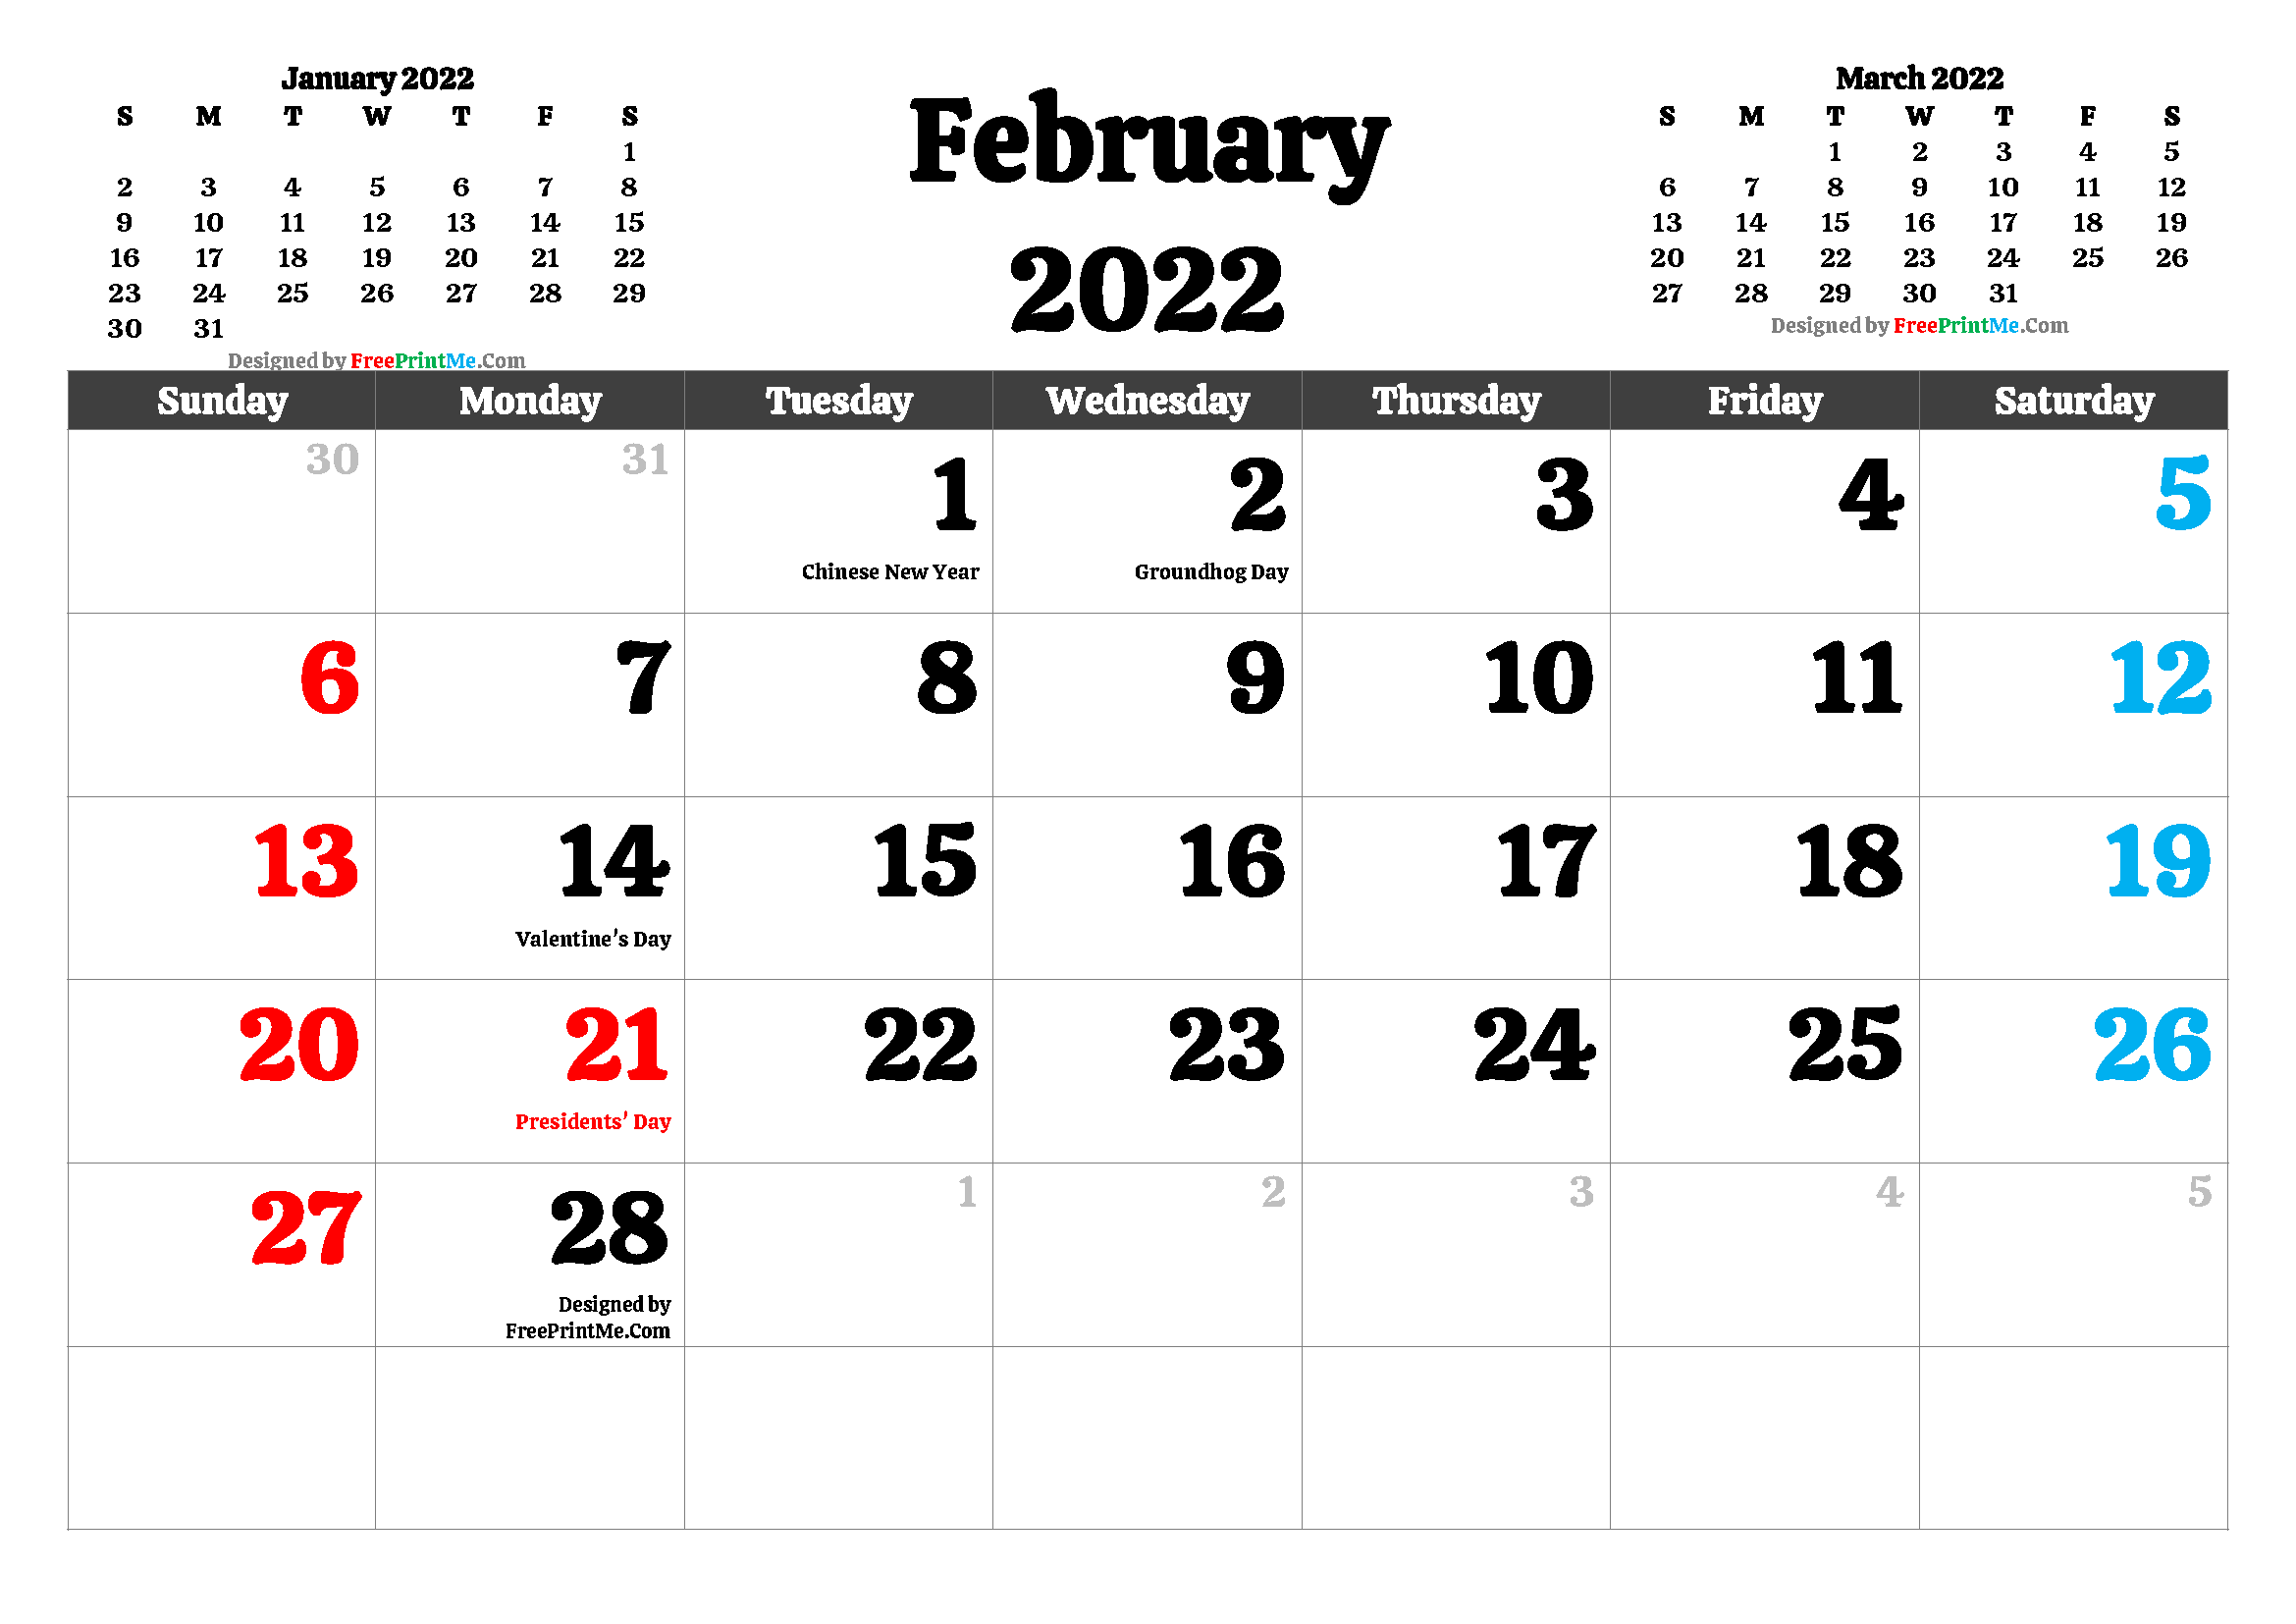 February 2022 Calendar With Holidays Free Printable February 2022 Calendar Pdf And Image